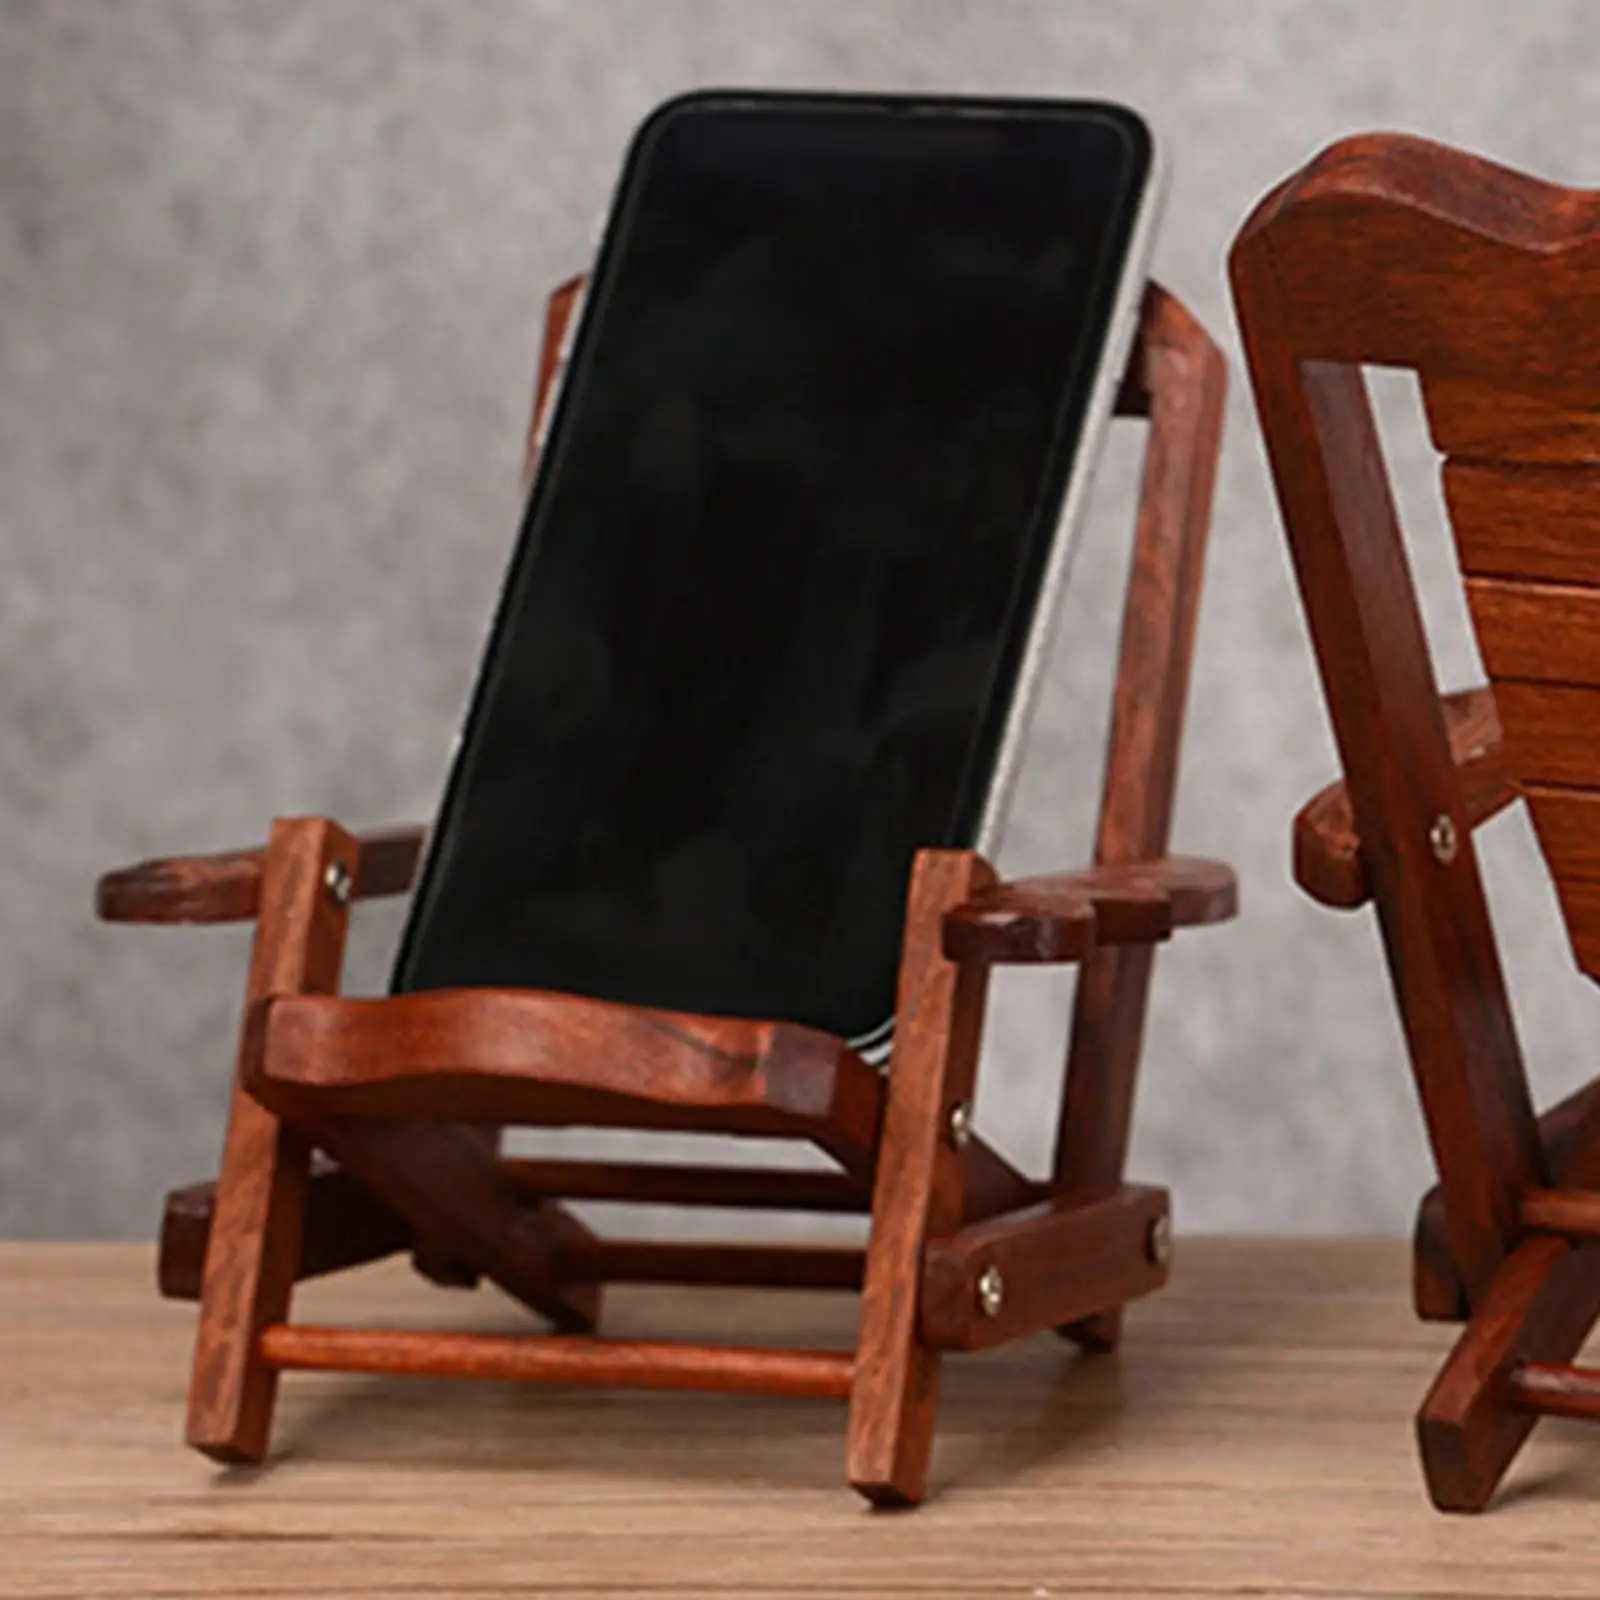 Wooden Deck Chair Desktop Phone Holder Bracket Support Mini Decoration Crafts Miniature Dollhouse Accessories for Office Travel